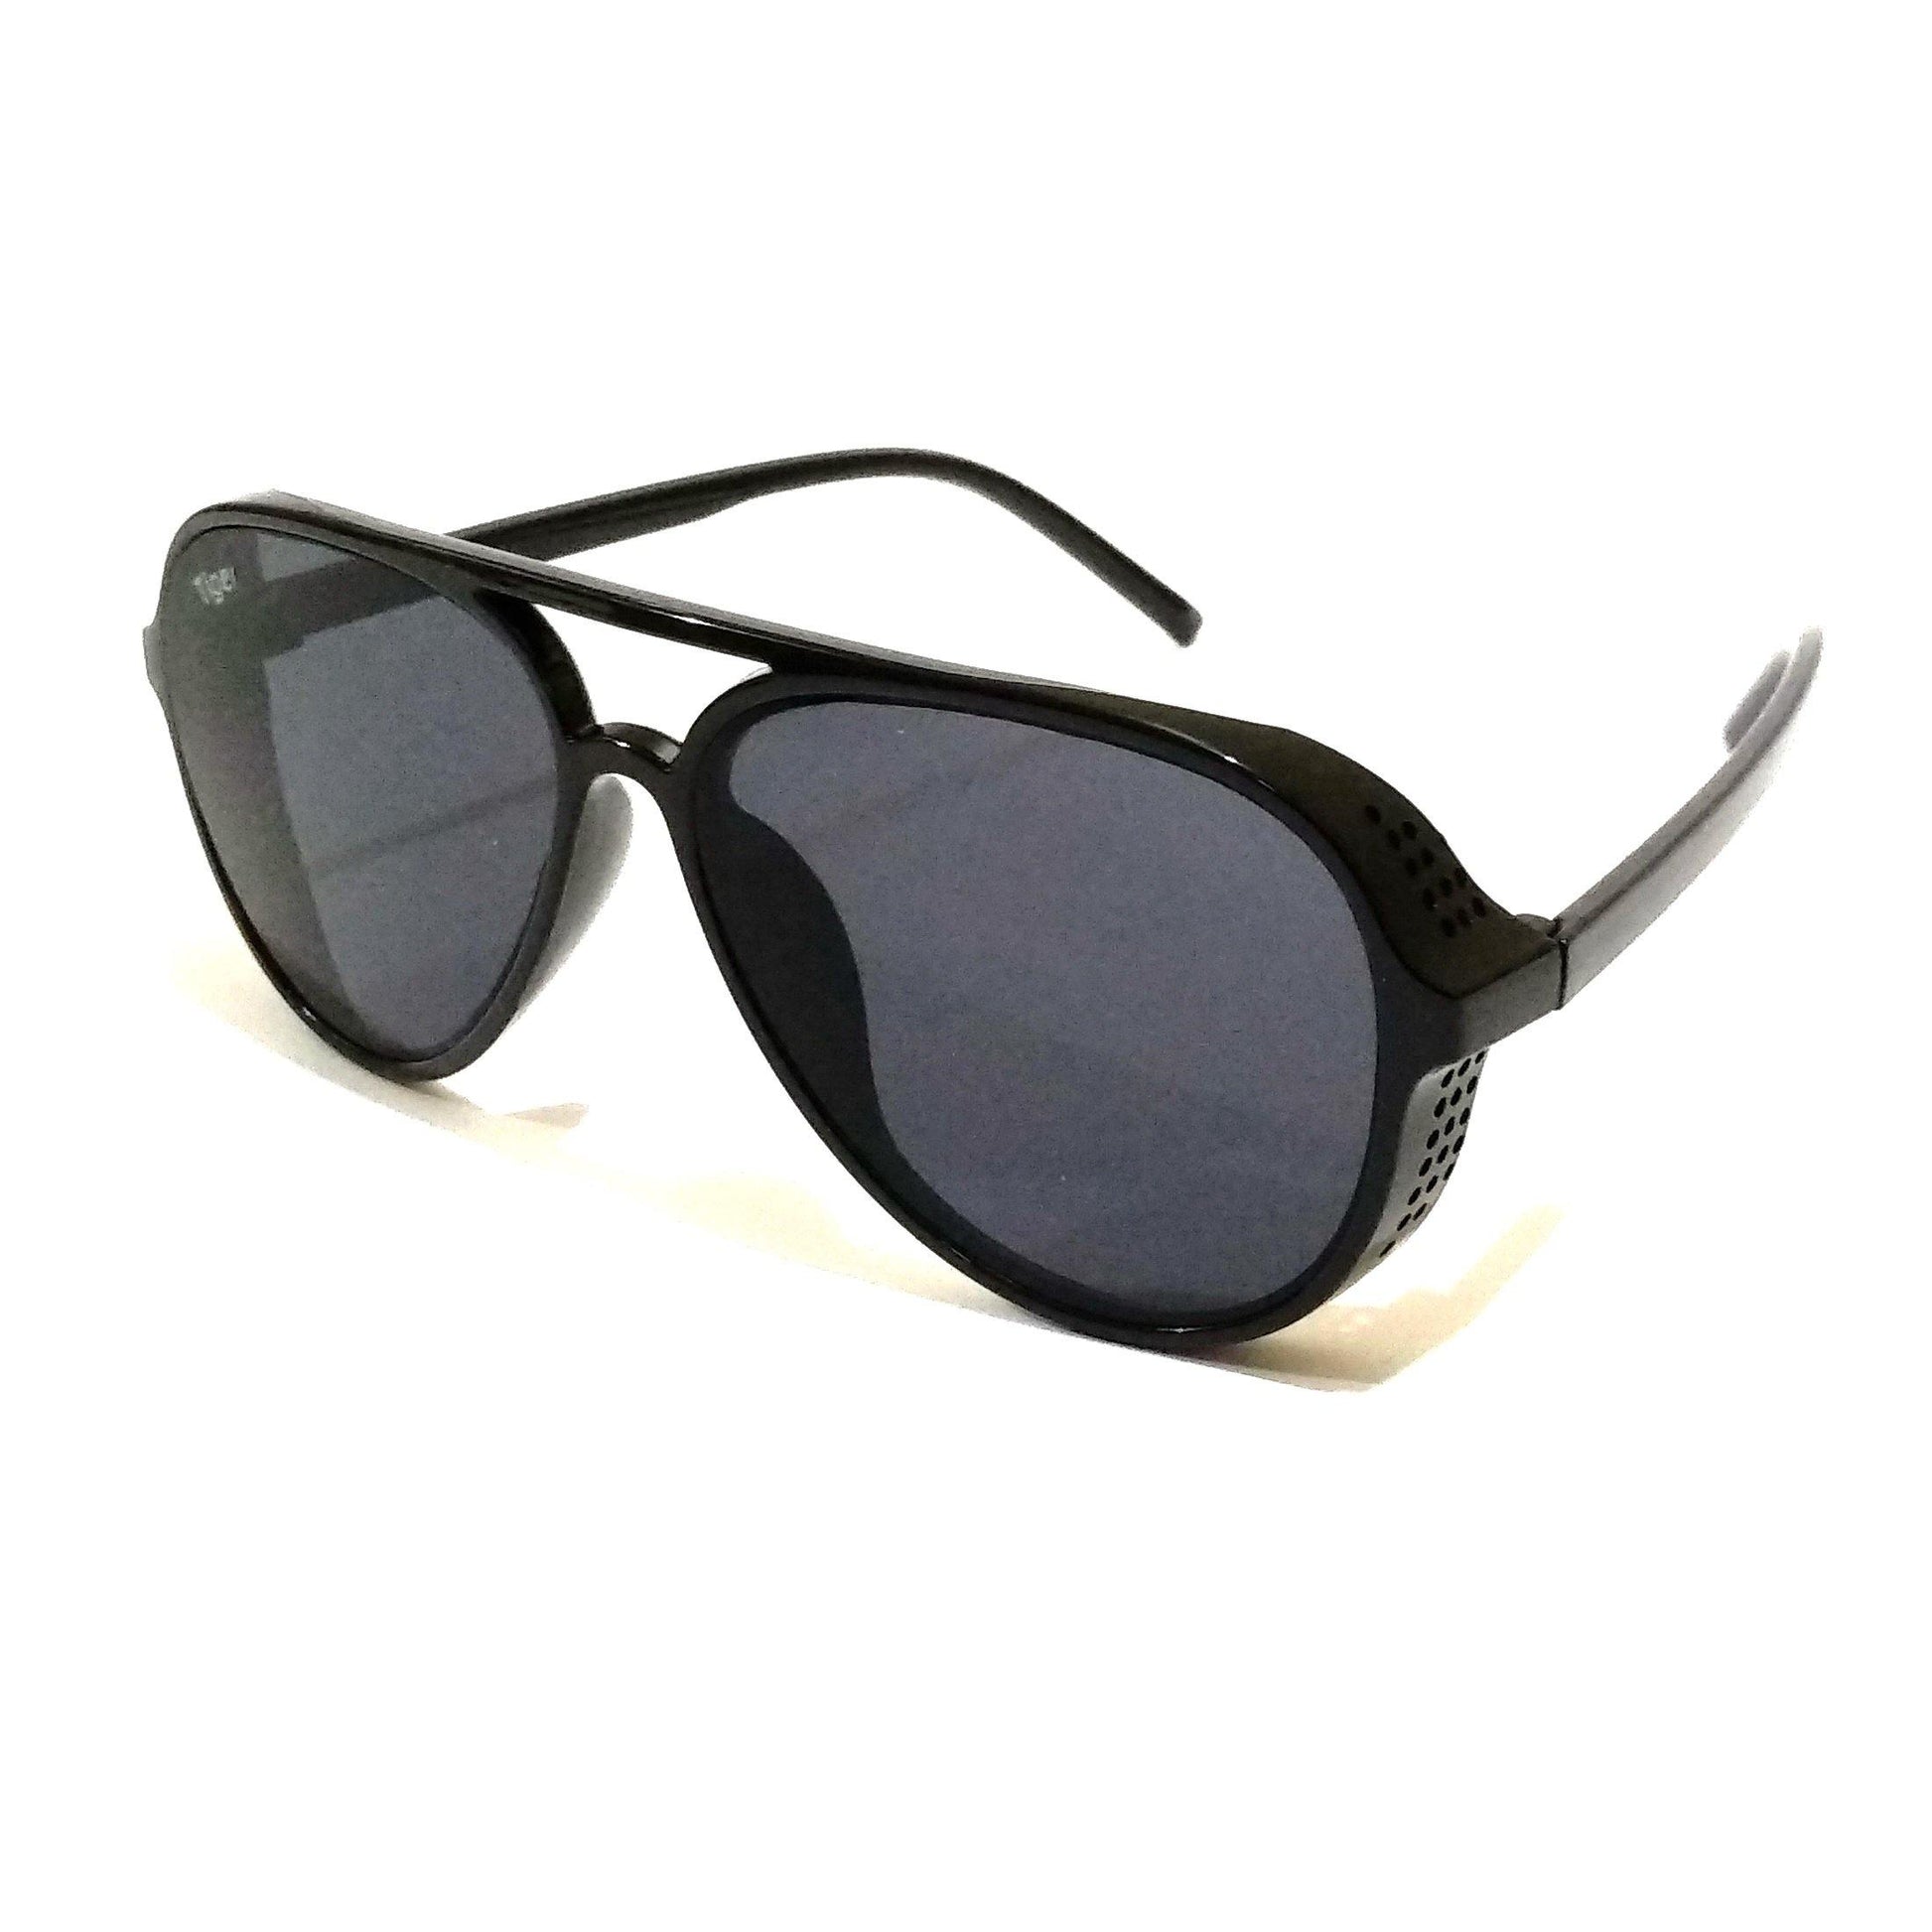 Buy Black Steampunk Aviator Sunglasses for Men - Glasses India Online in India